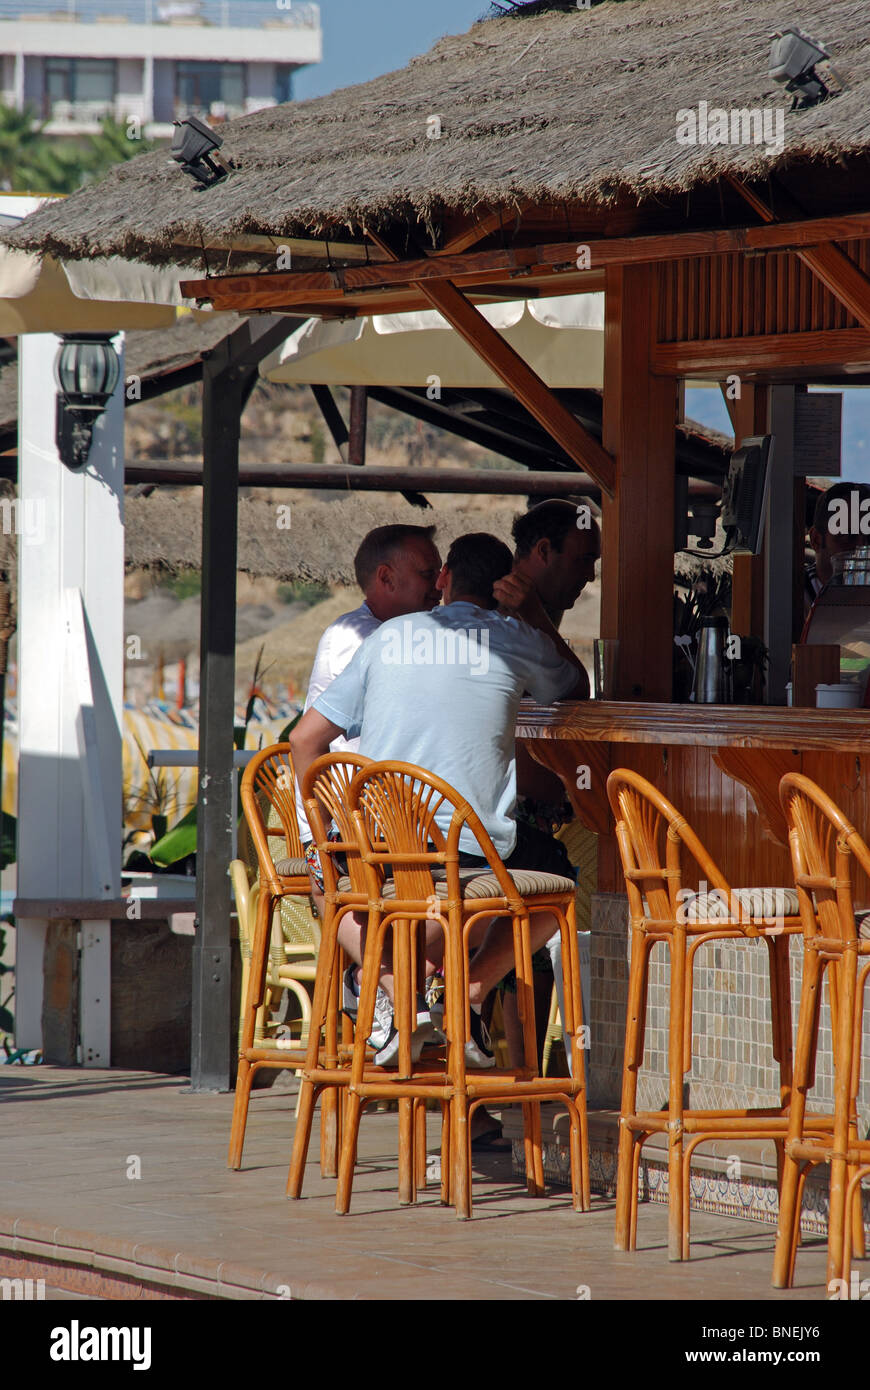 Bar de plage (Chiringuito), Torremolinos, Costa del Sol, la province de Malaga, Andalousie, Espagne, Europe de l'Ouest. Banque D'Images